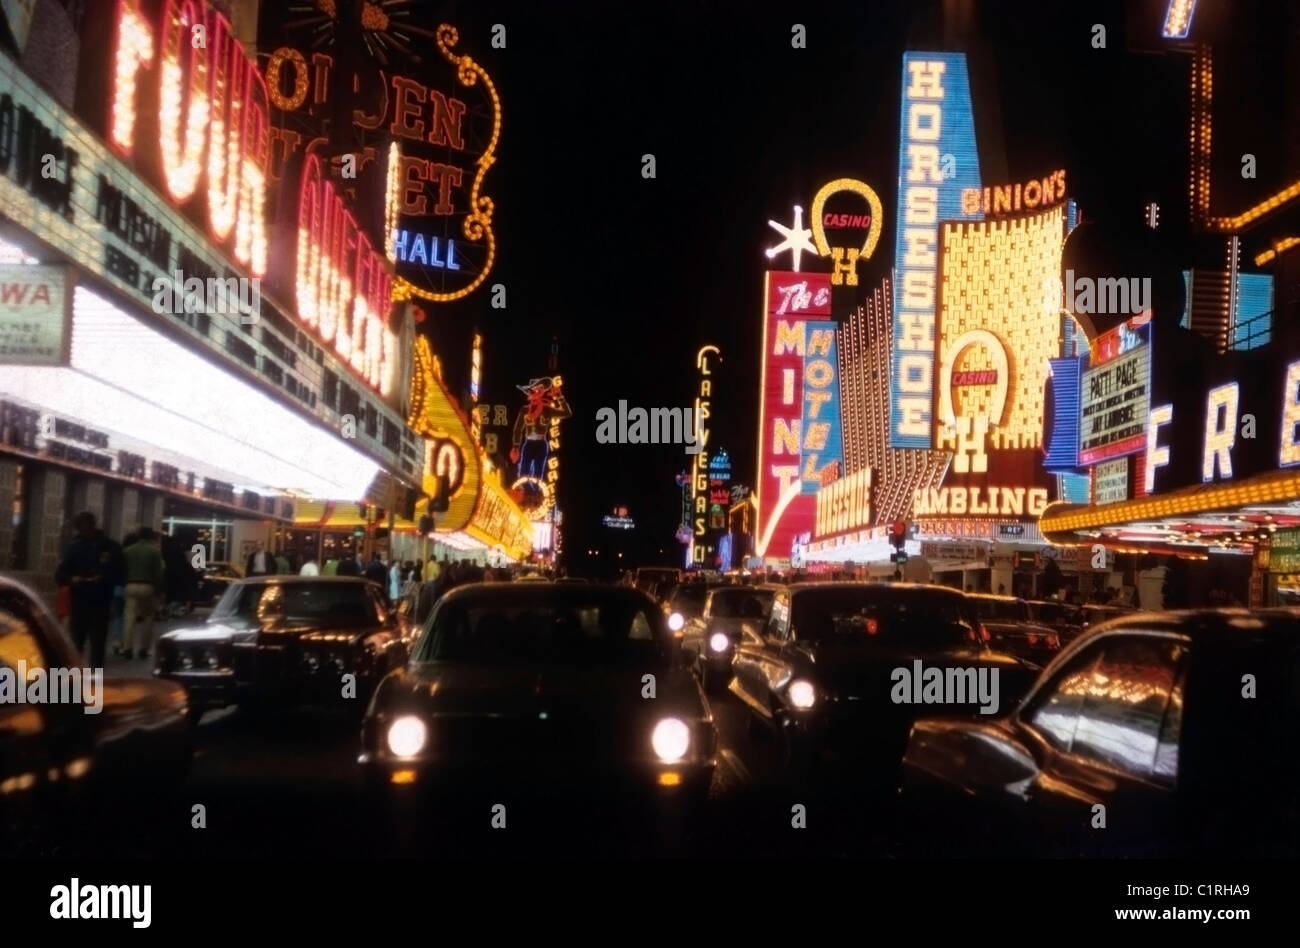 Las Vegas strip vintage 1960s 1970s photo of casinos, nightclubs, neon signs, cars in traffic Nevada USA   1971  KATHY DEWITT Stock Photo